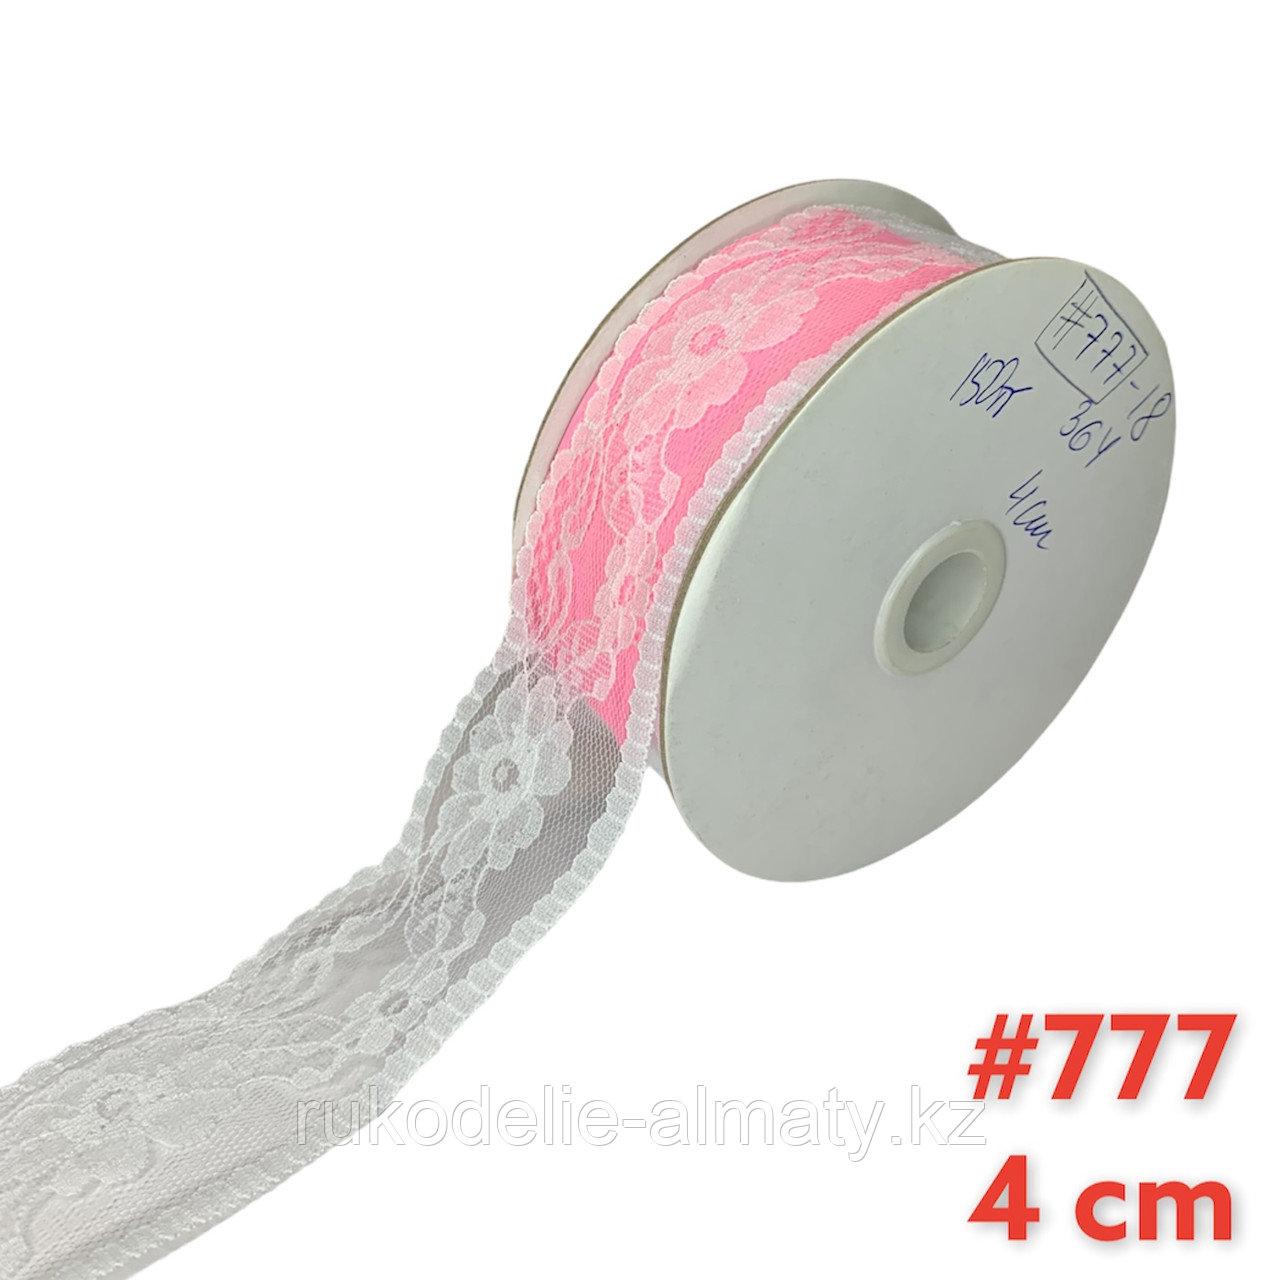 Кружево-гипюр в ленте белого цвета,ширина-40 мм, #777